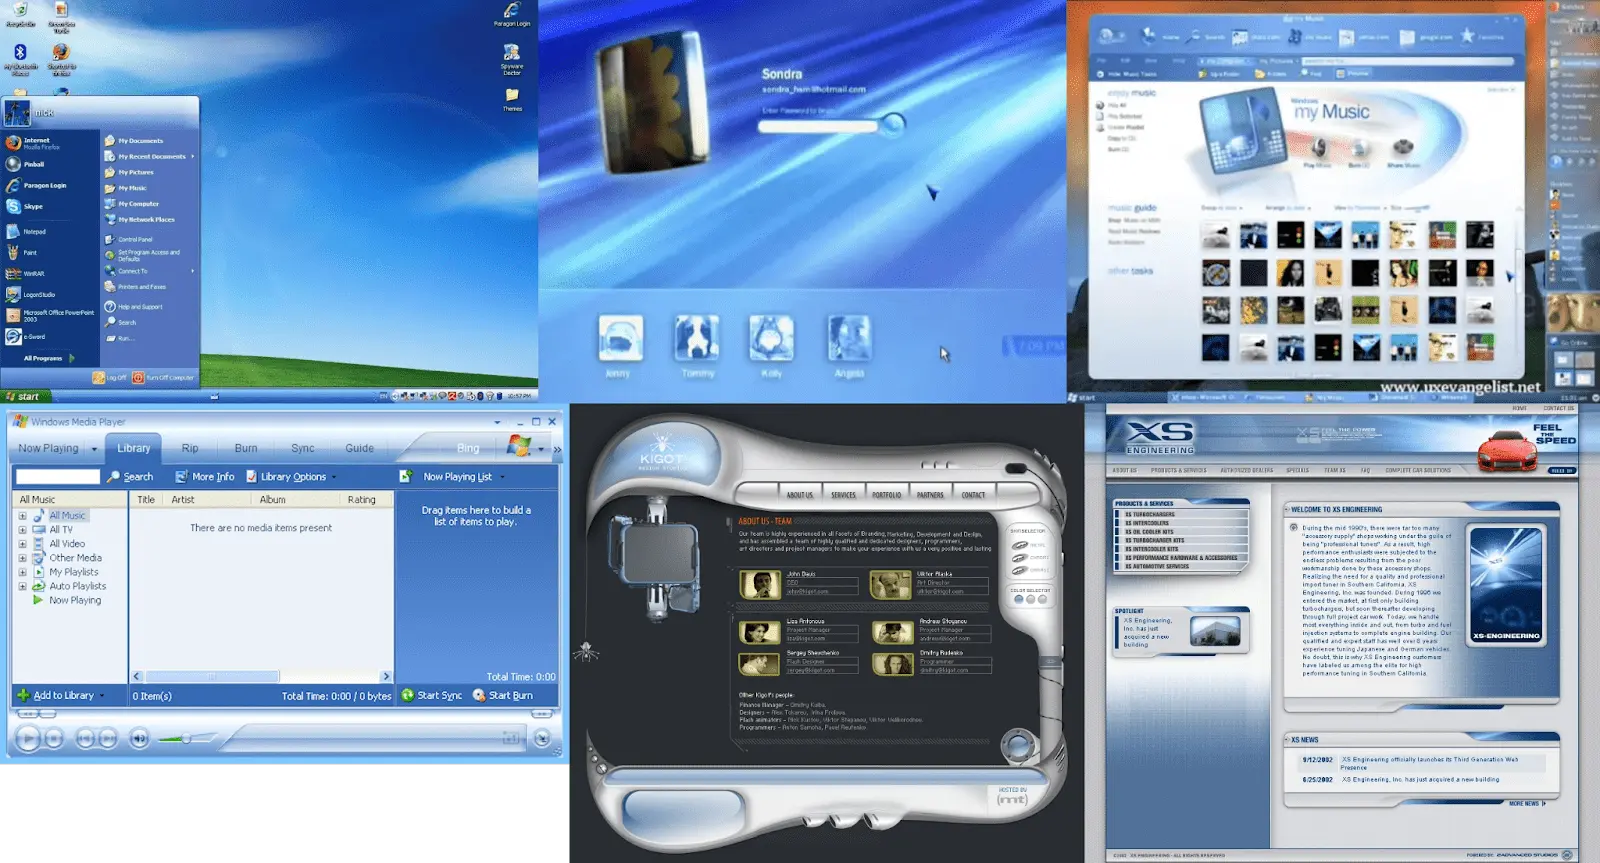 Uno screenshot di Windows Longhorn, un precursore dell'estetica Frutiger Aero